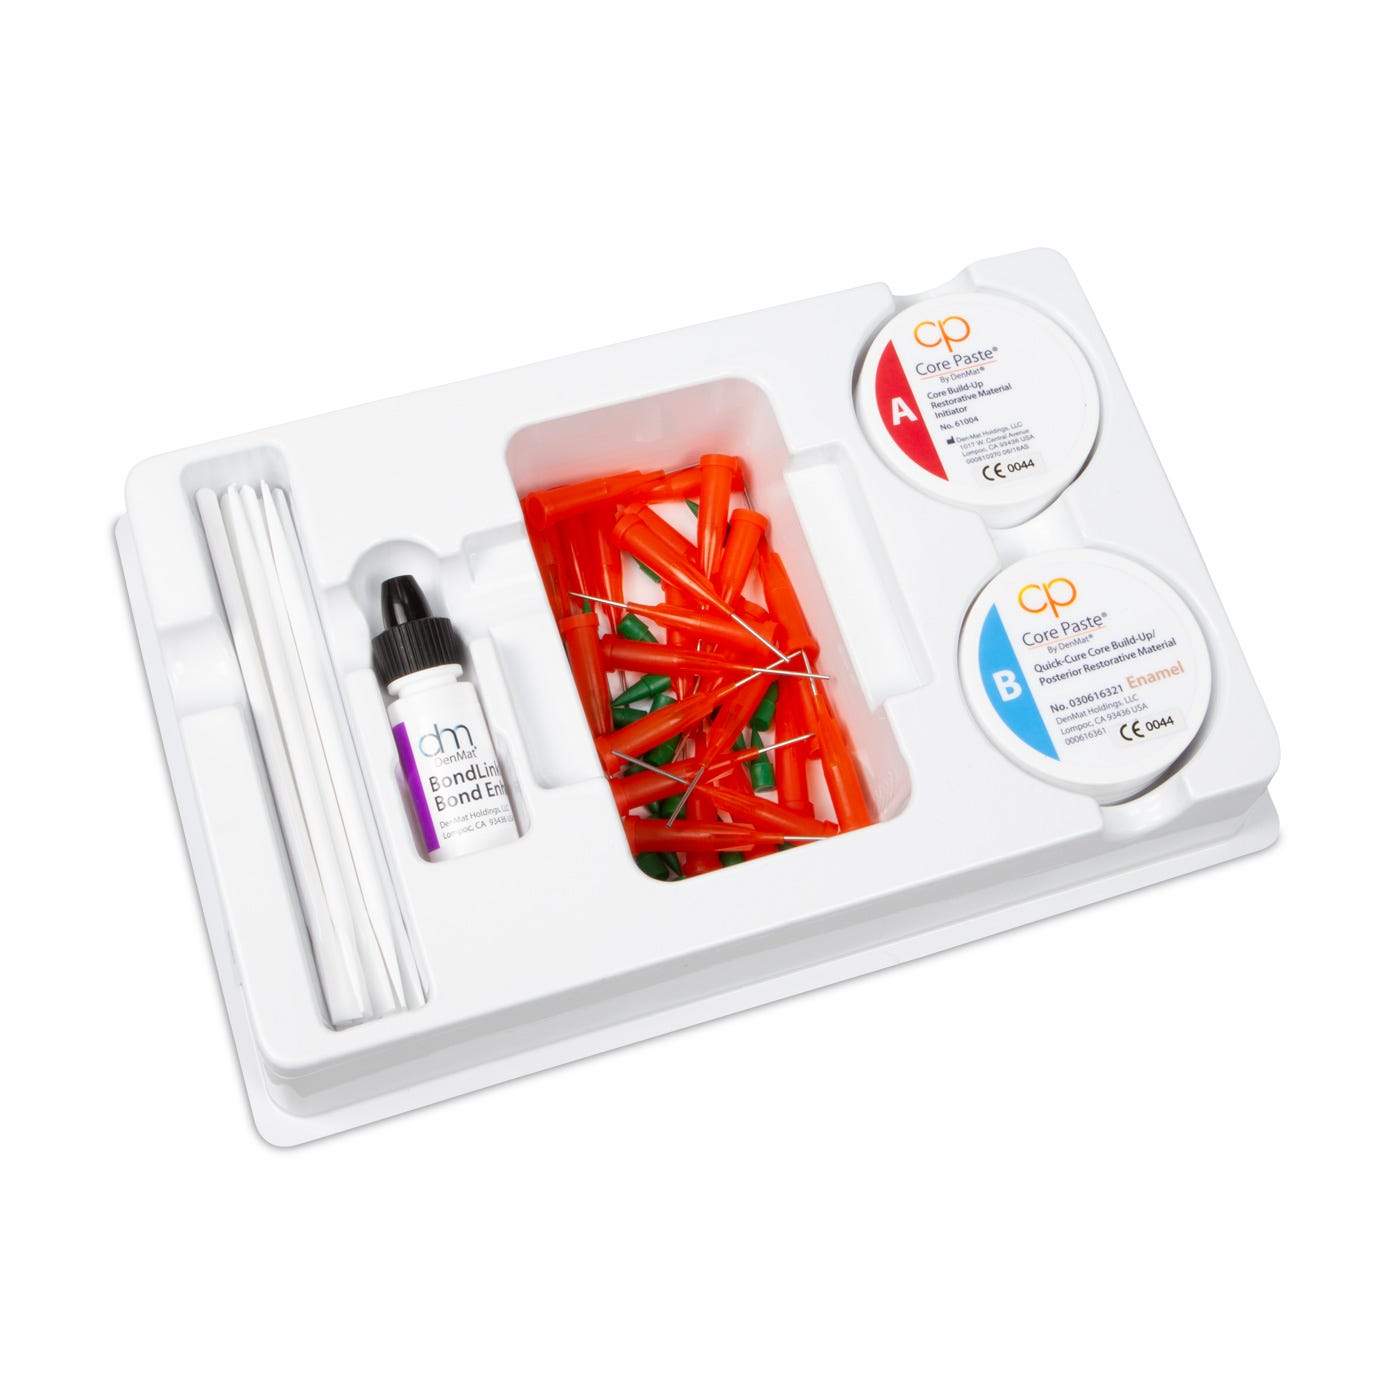 Core Paste Jars Enamel Quick Set with Fluoride Self-Cure Kit